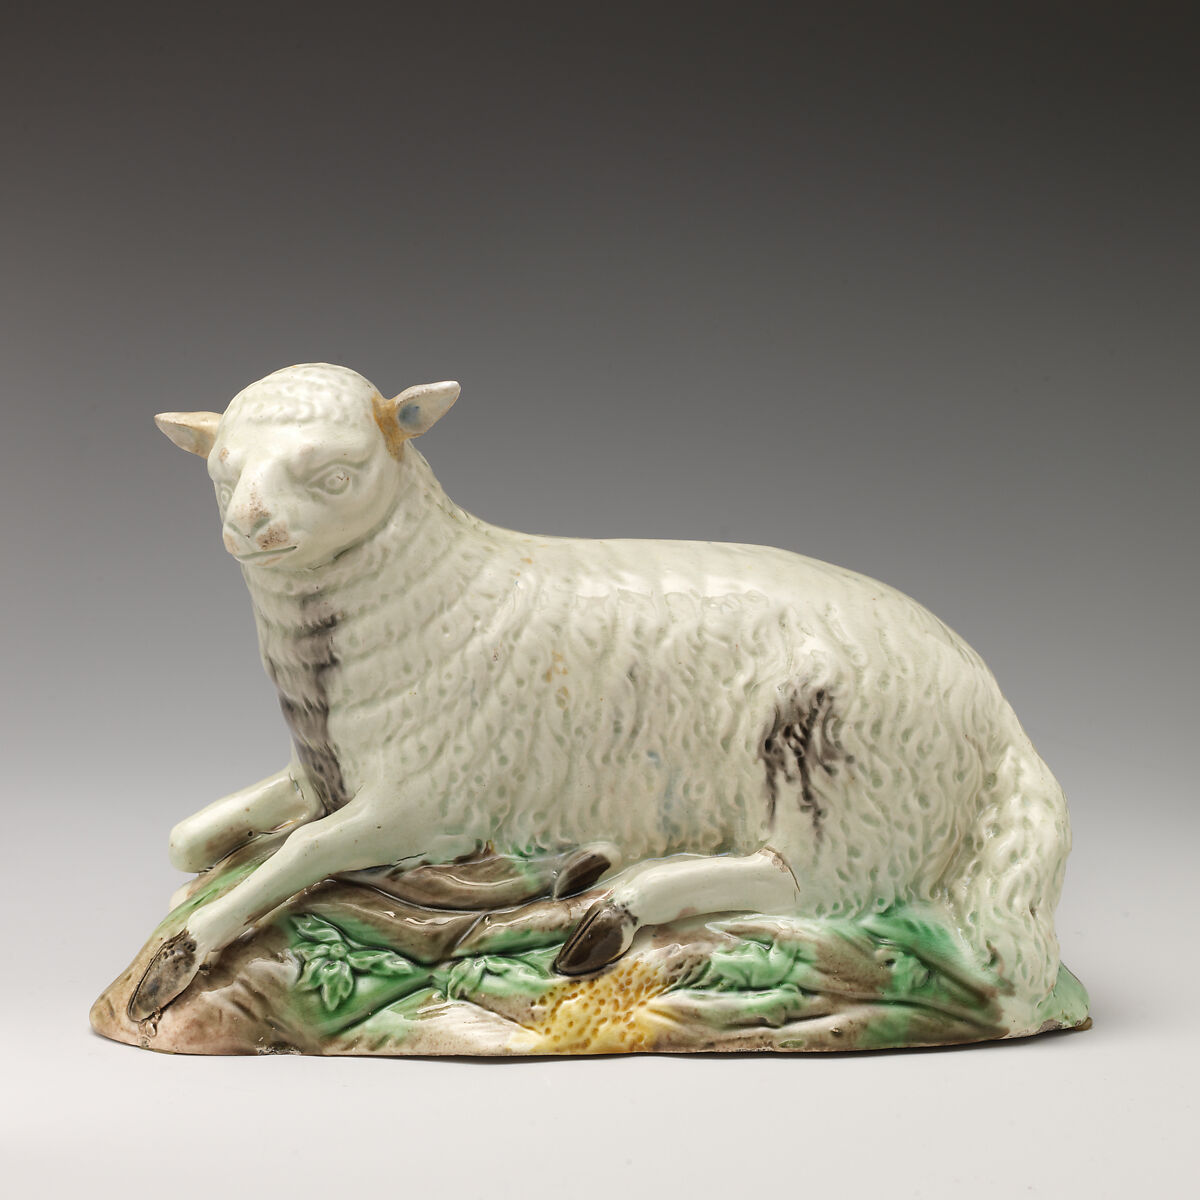 Sheep, Ralph Wood the Younger (British, Burslem 1748–1795 Burslem), Lead-glazed earthenware, British, Burslem, Staffordshire 